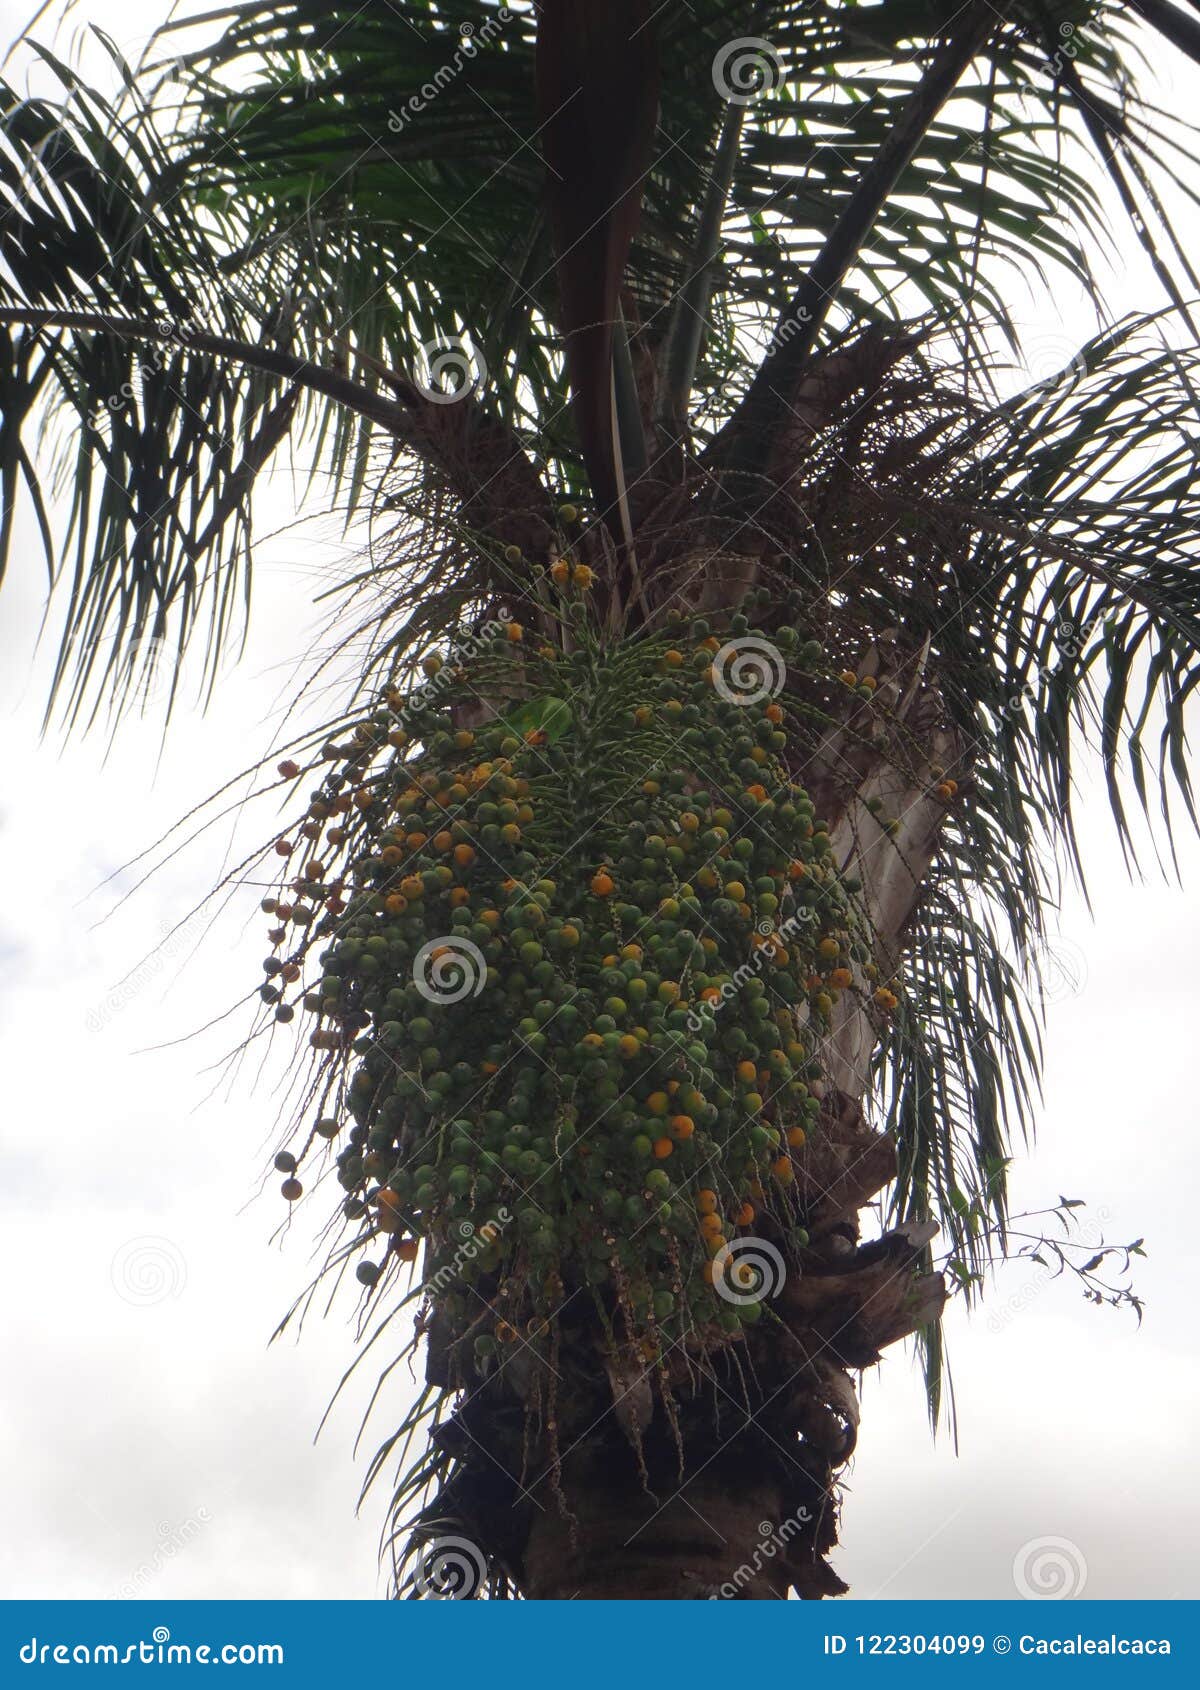 parakeet on clusters of immature and mature fruit of syagrus romanzoffiana